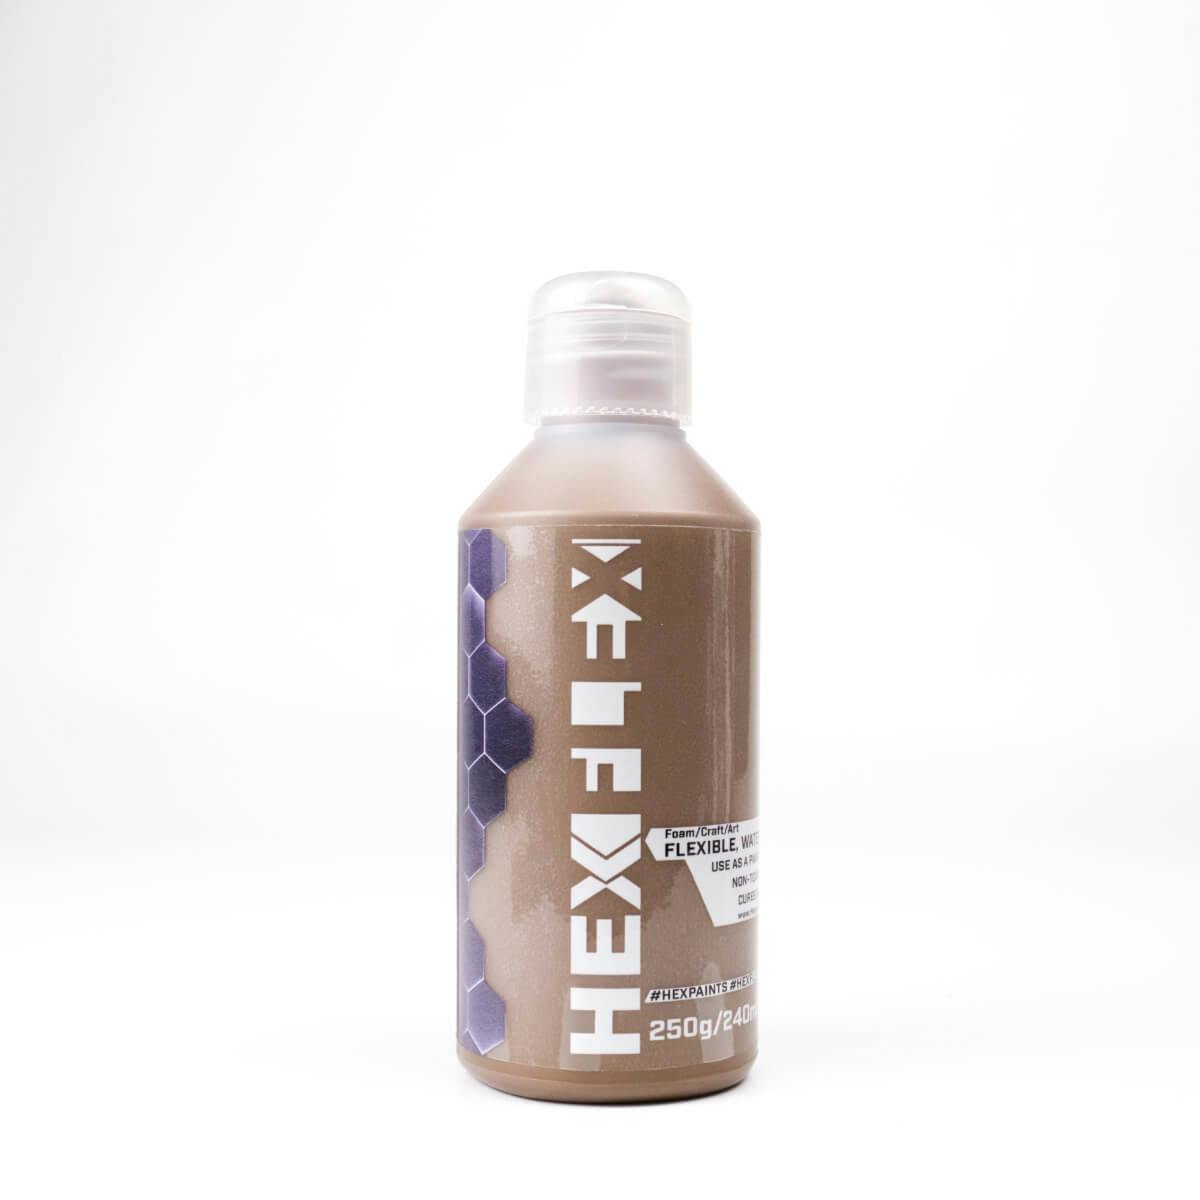 Product HexFlex Primer in brown